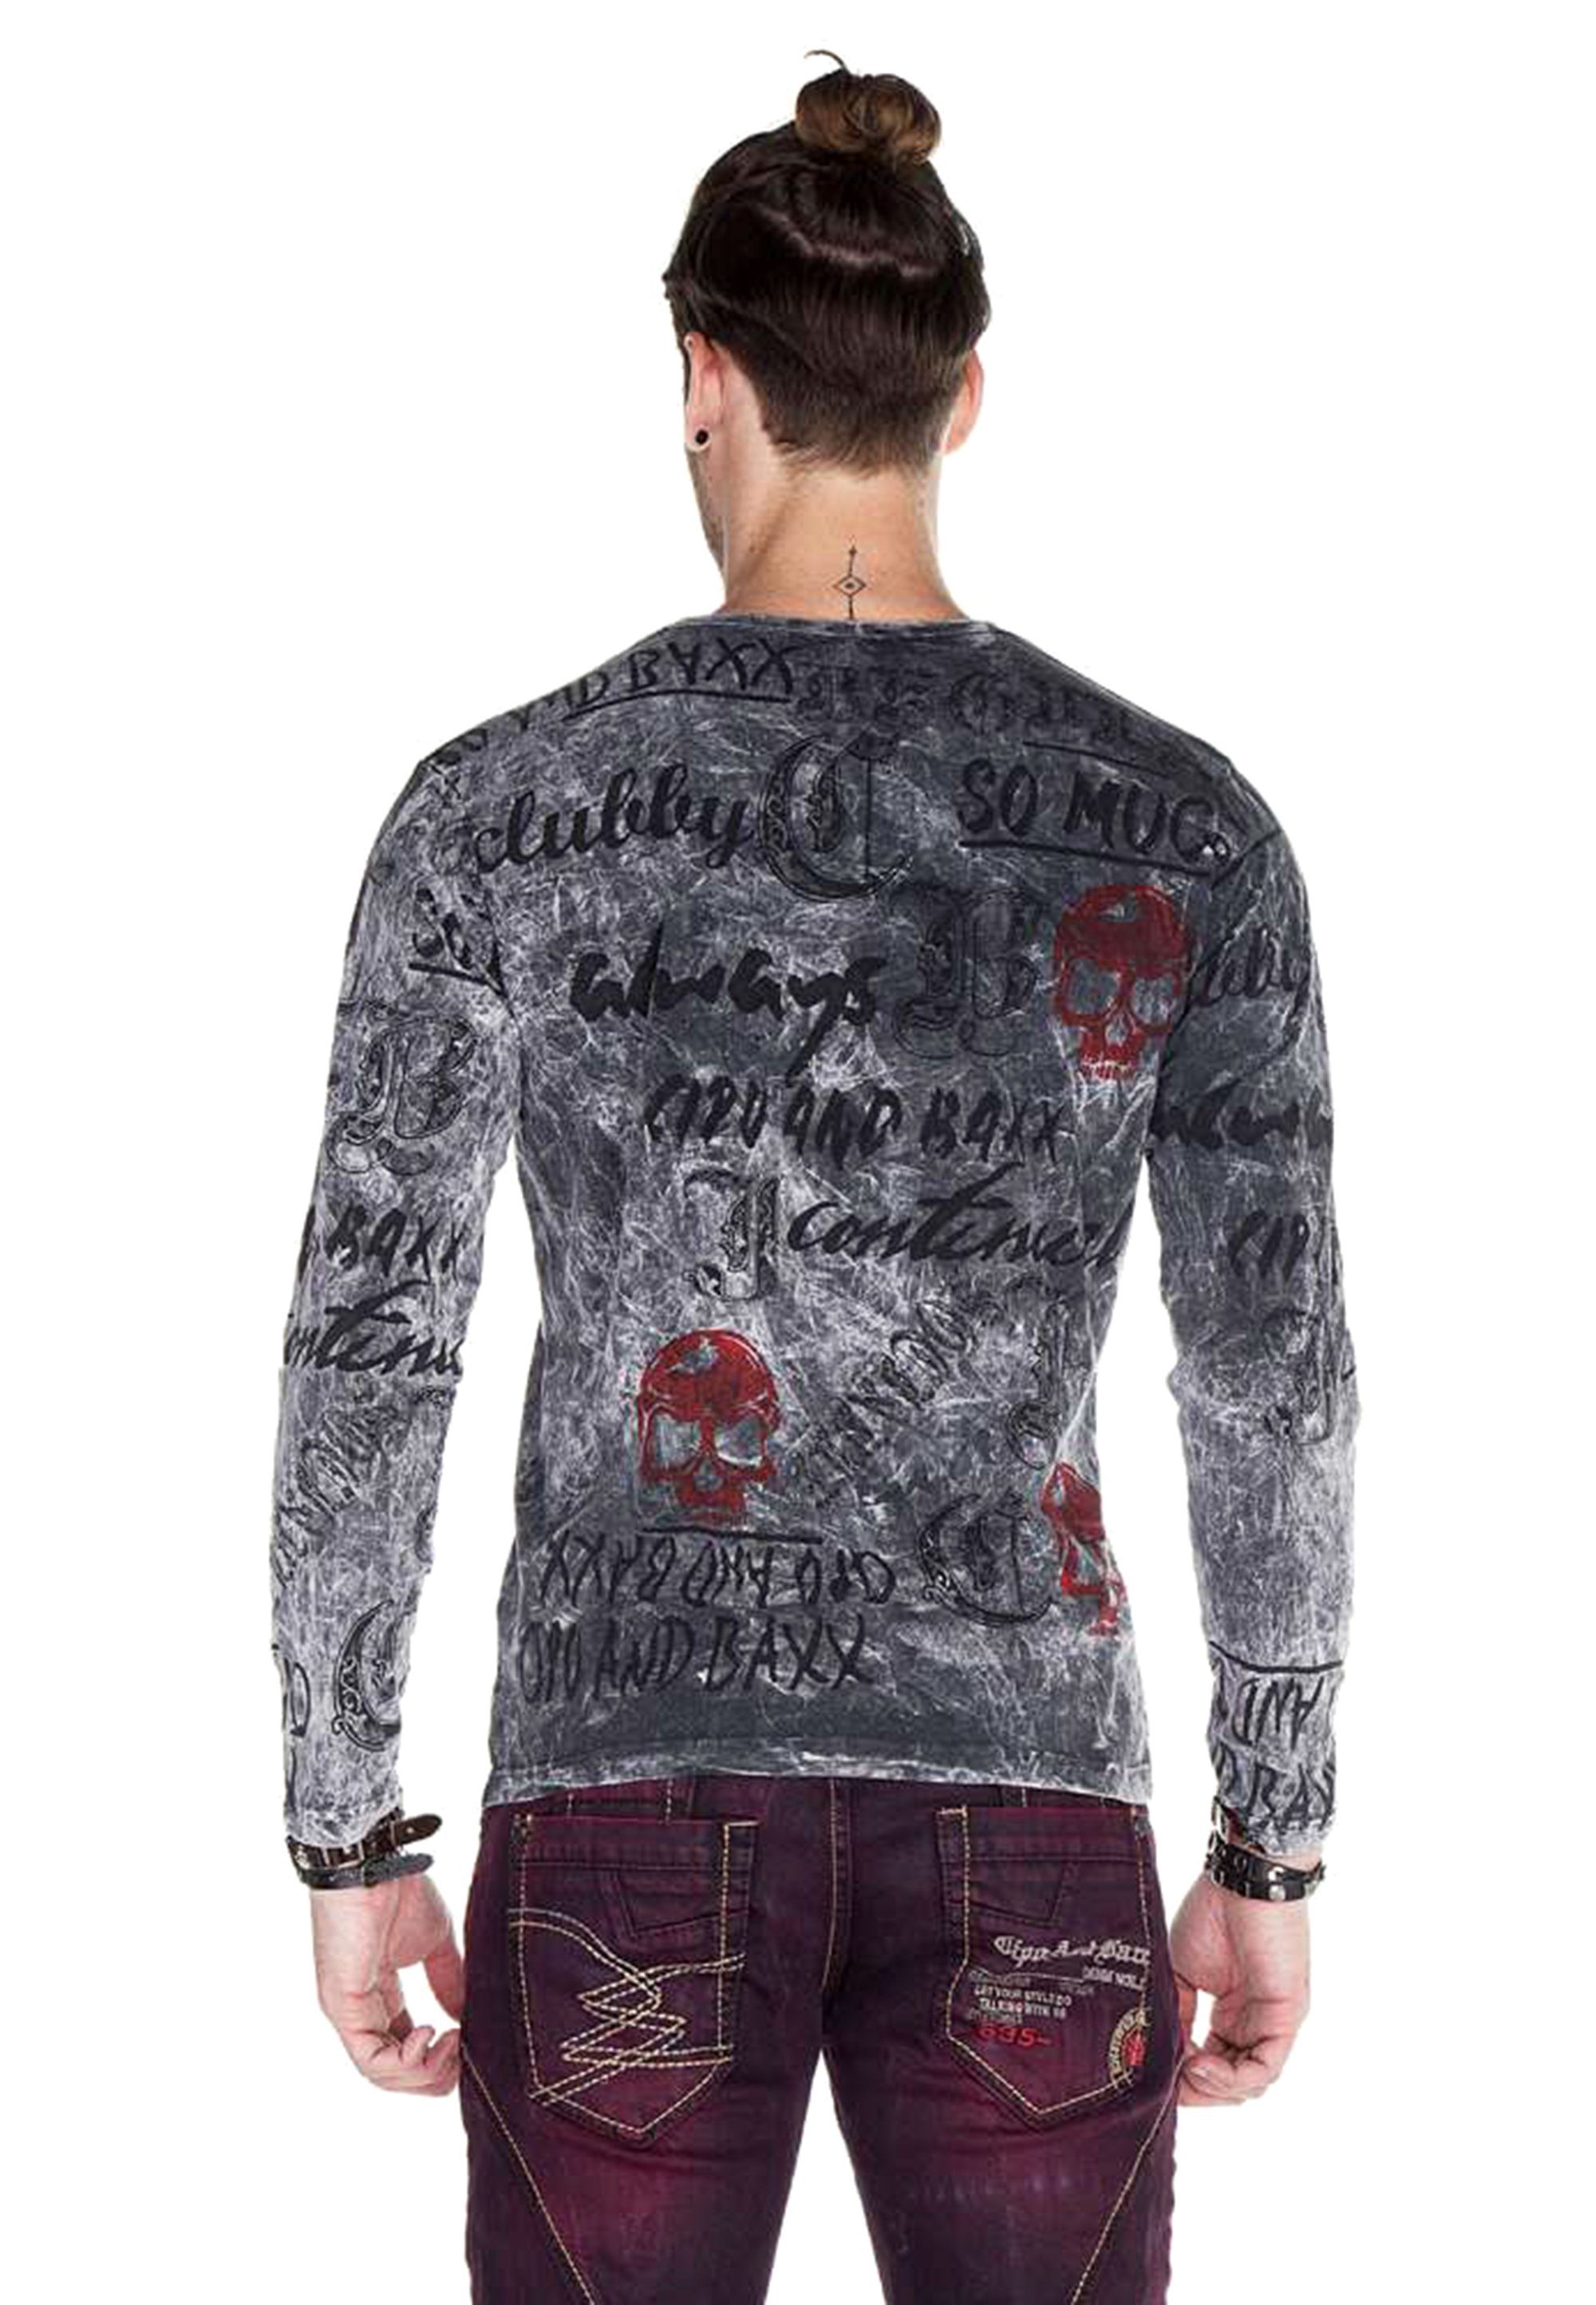 Cipo & Baxx Sweatshirt mit Allover-Prints coolen